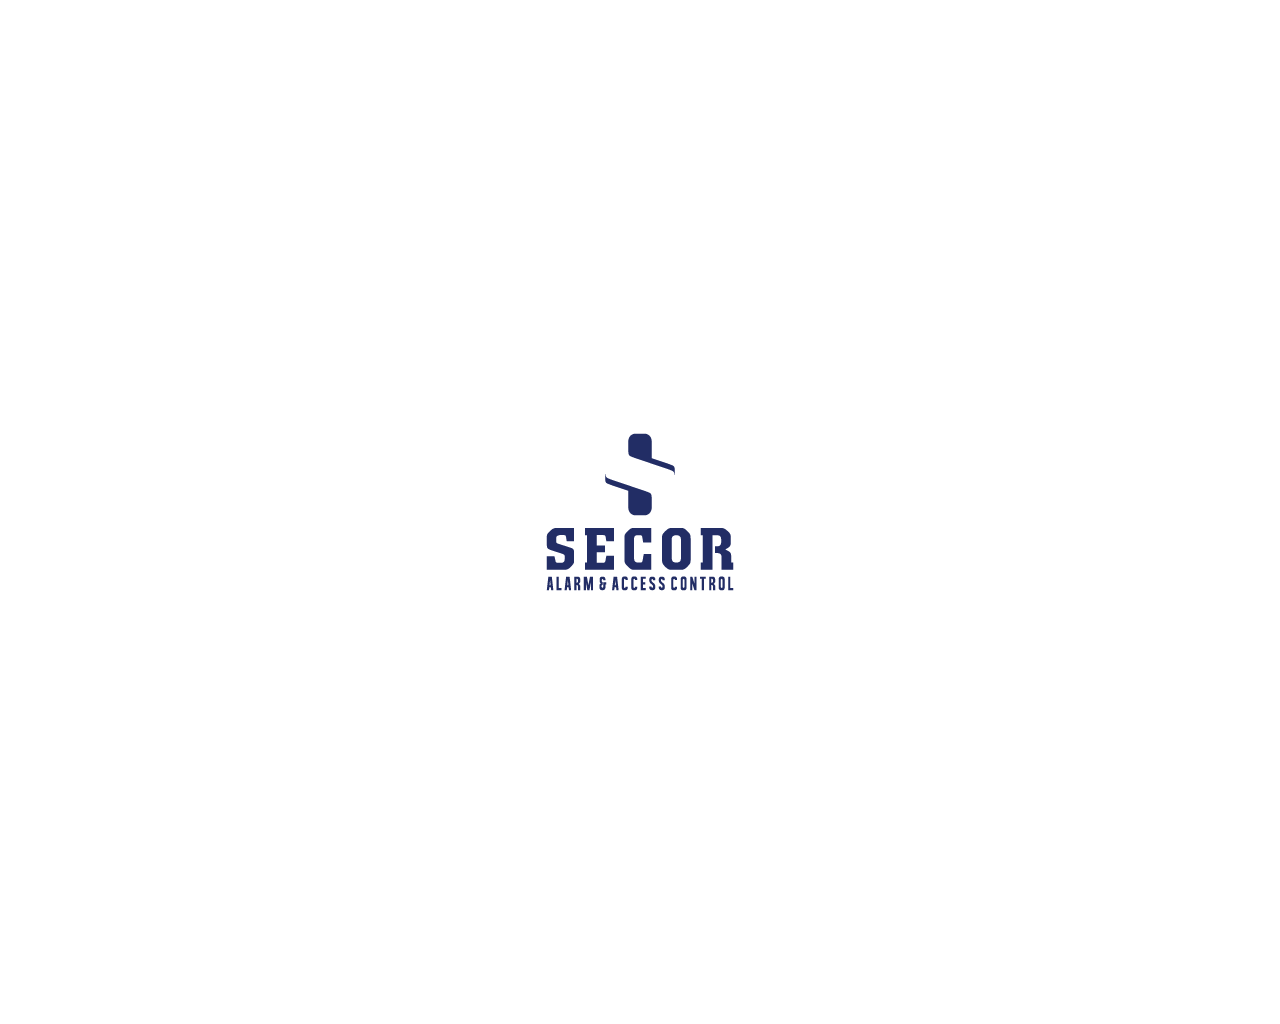 DFM Logo - Bold, Serious, It Company Logo Design for SECOR alarm & access ...